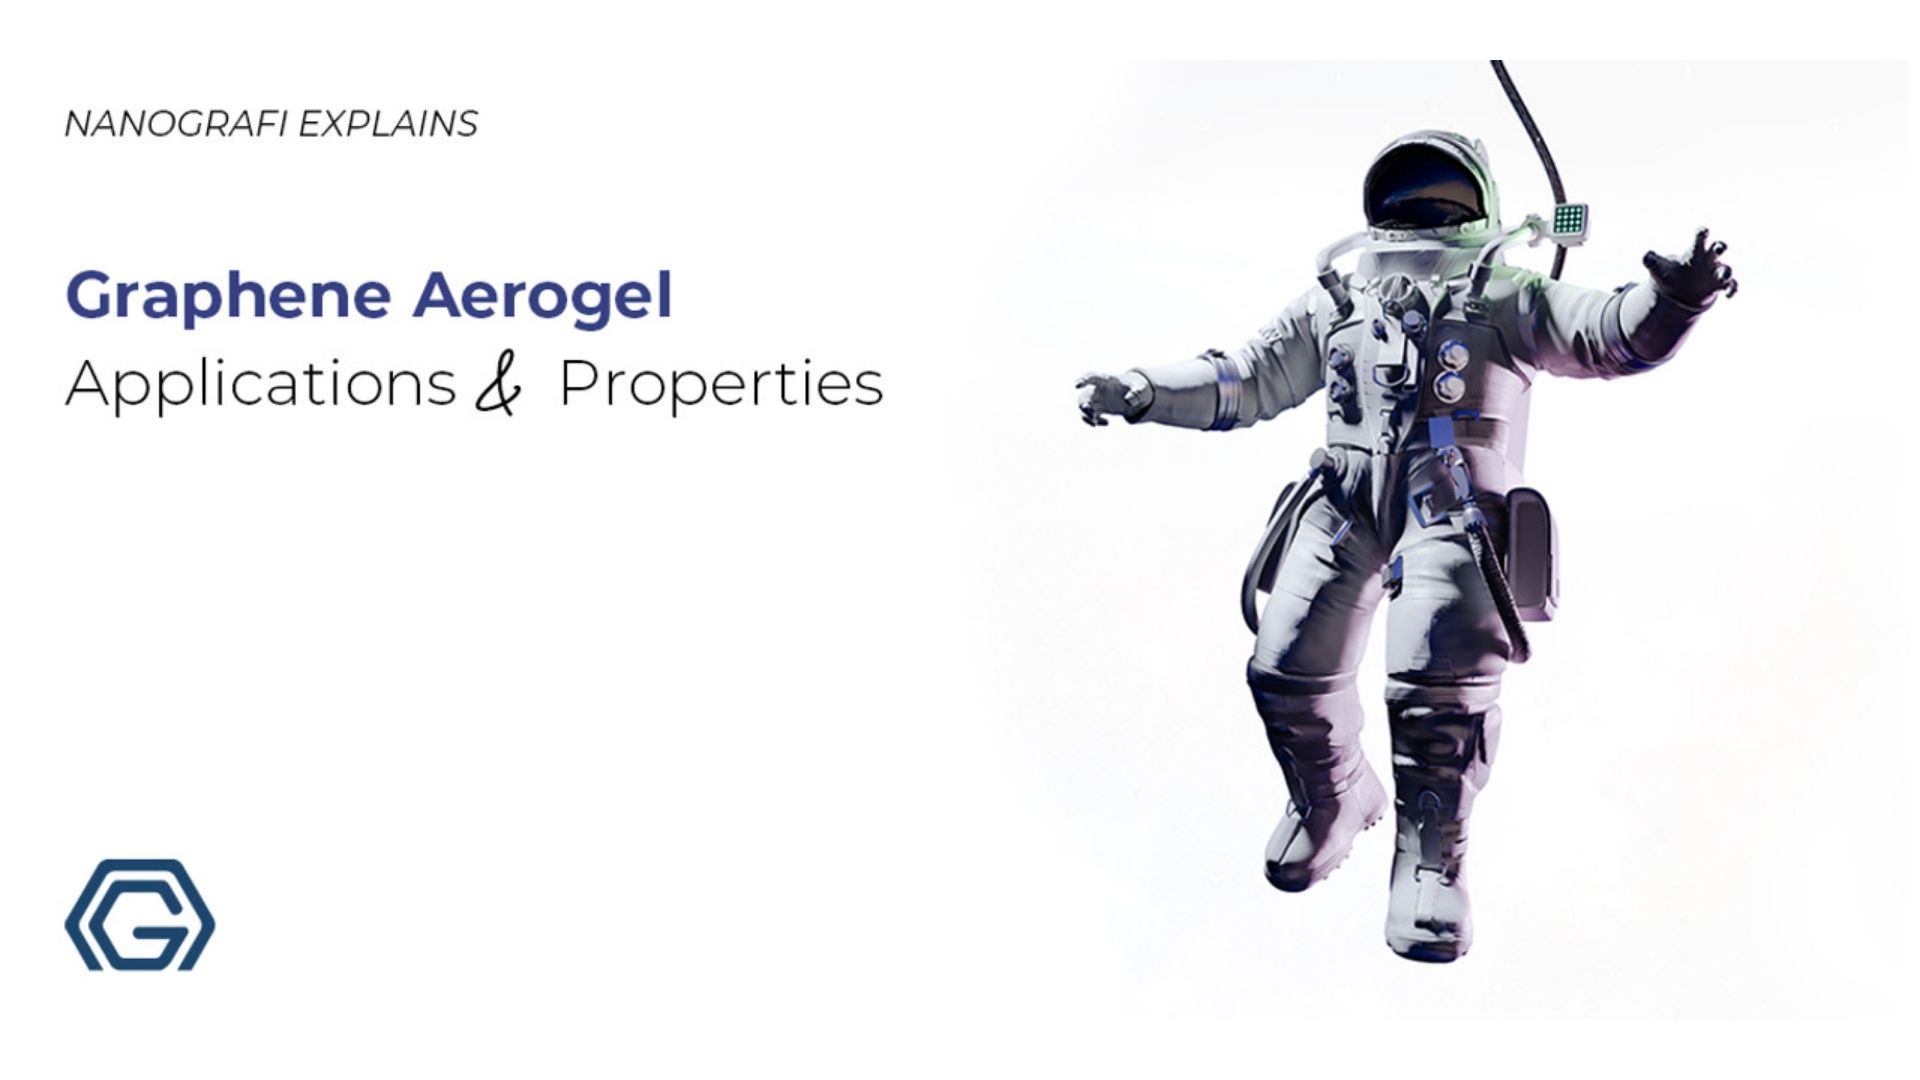 Graphene aerogel applications and properties